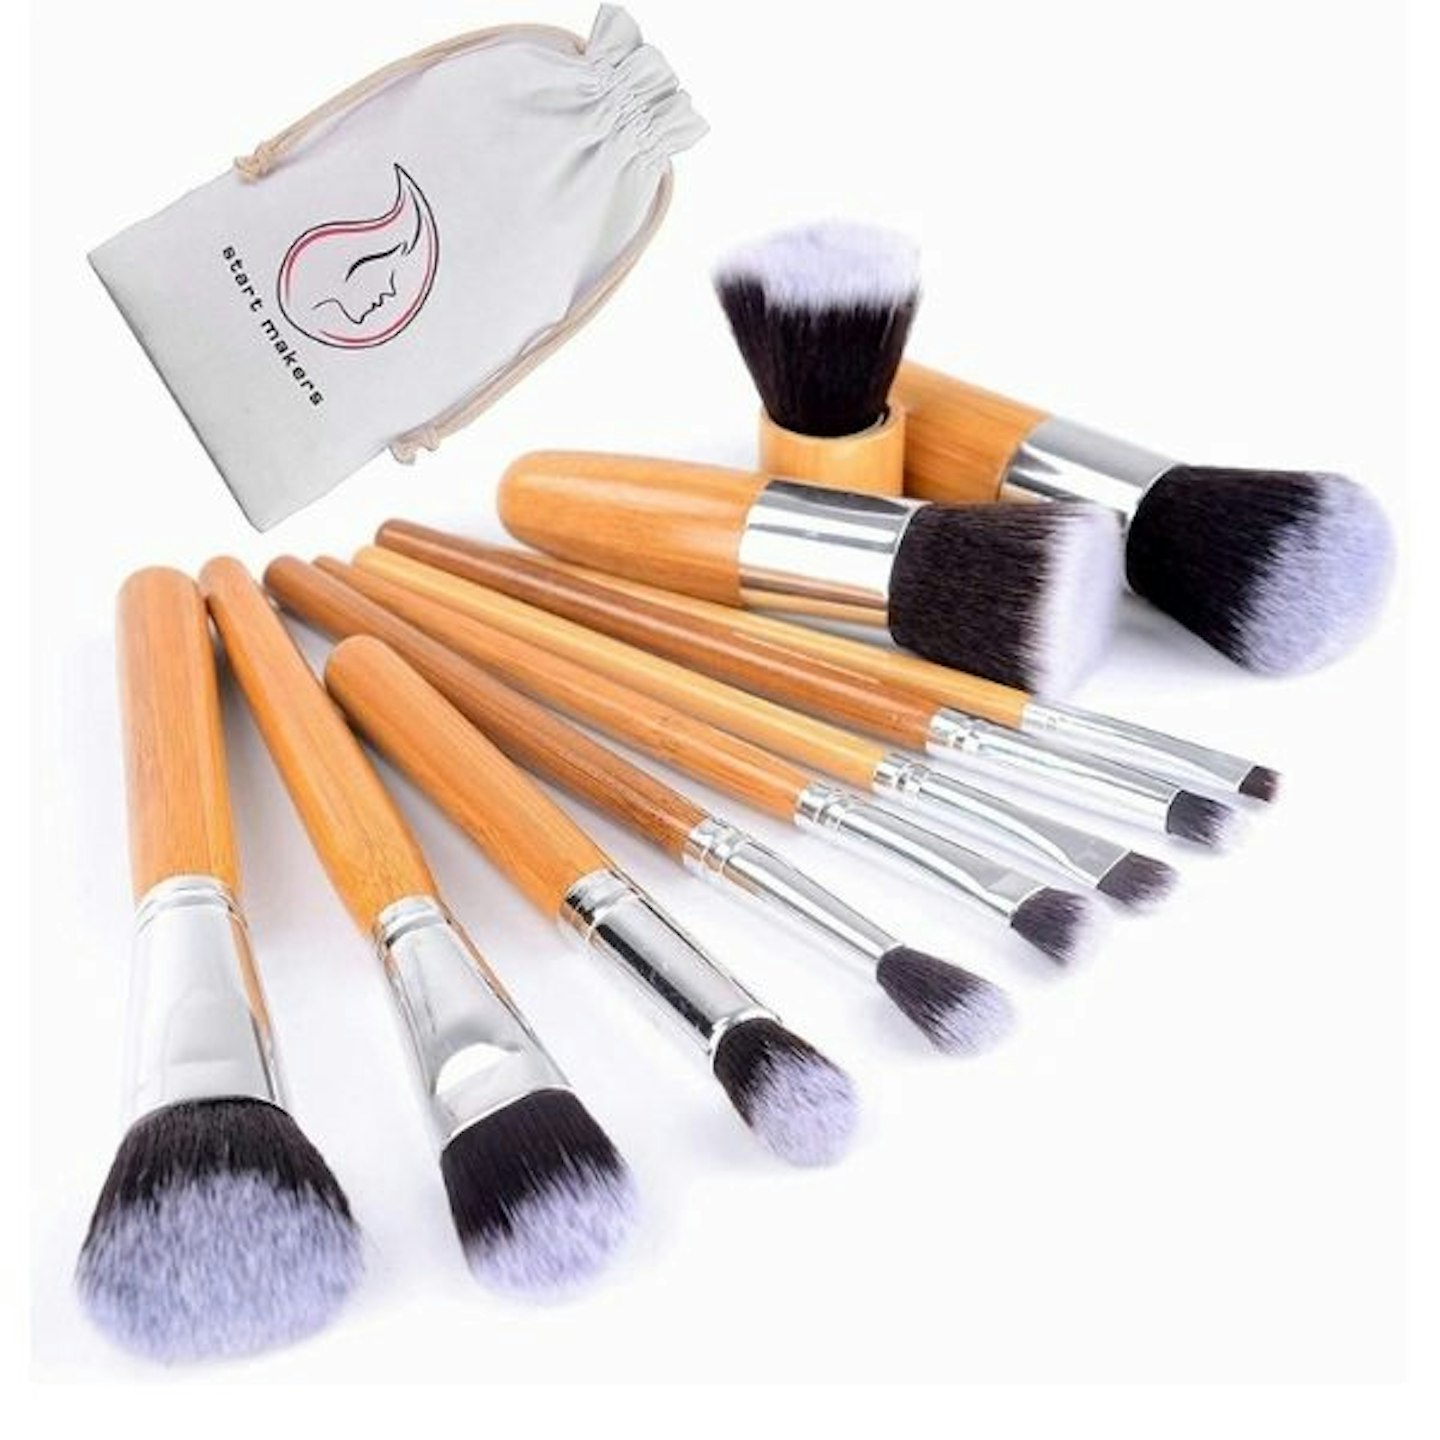 Bamboo Makeup Brushes Start Makers 11 Pieces